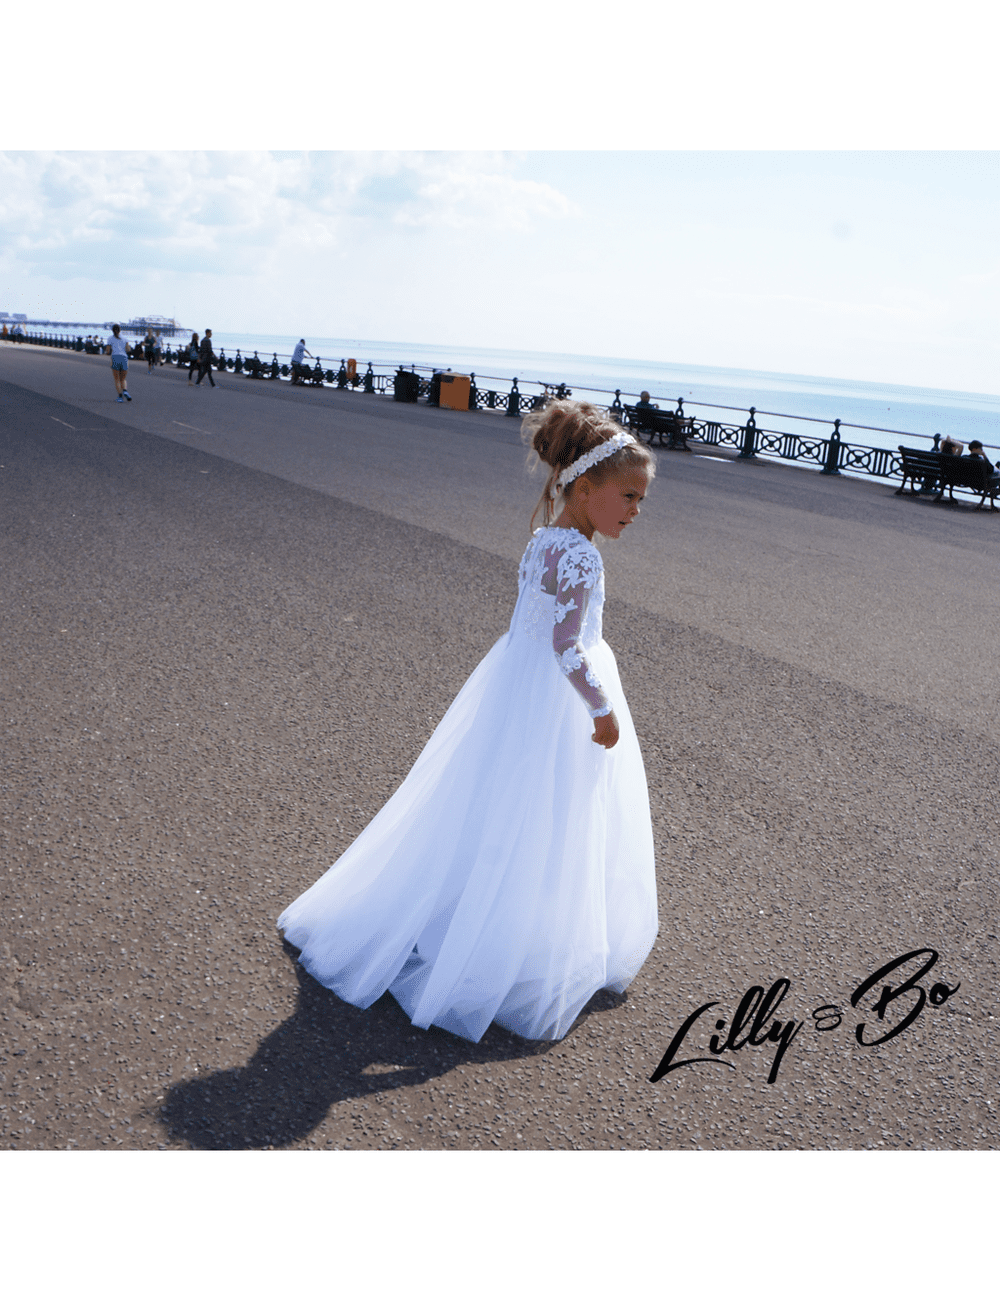 Cynthia in White - Flower Girl | Communion Dress